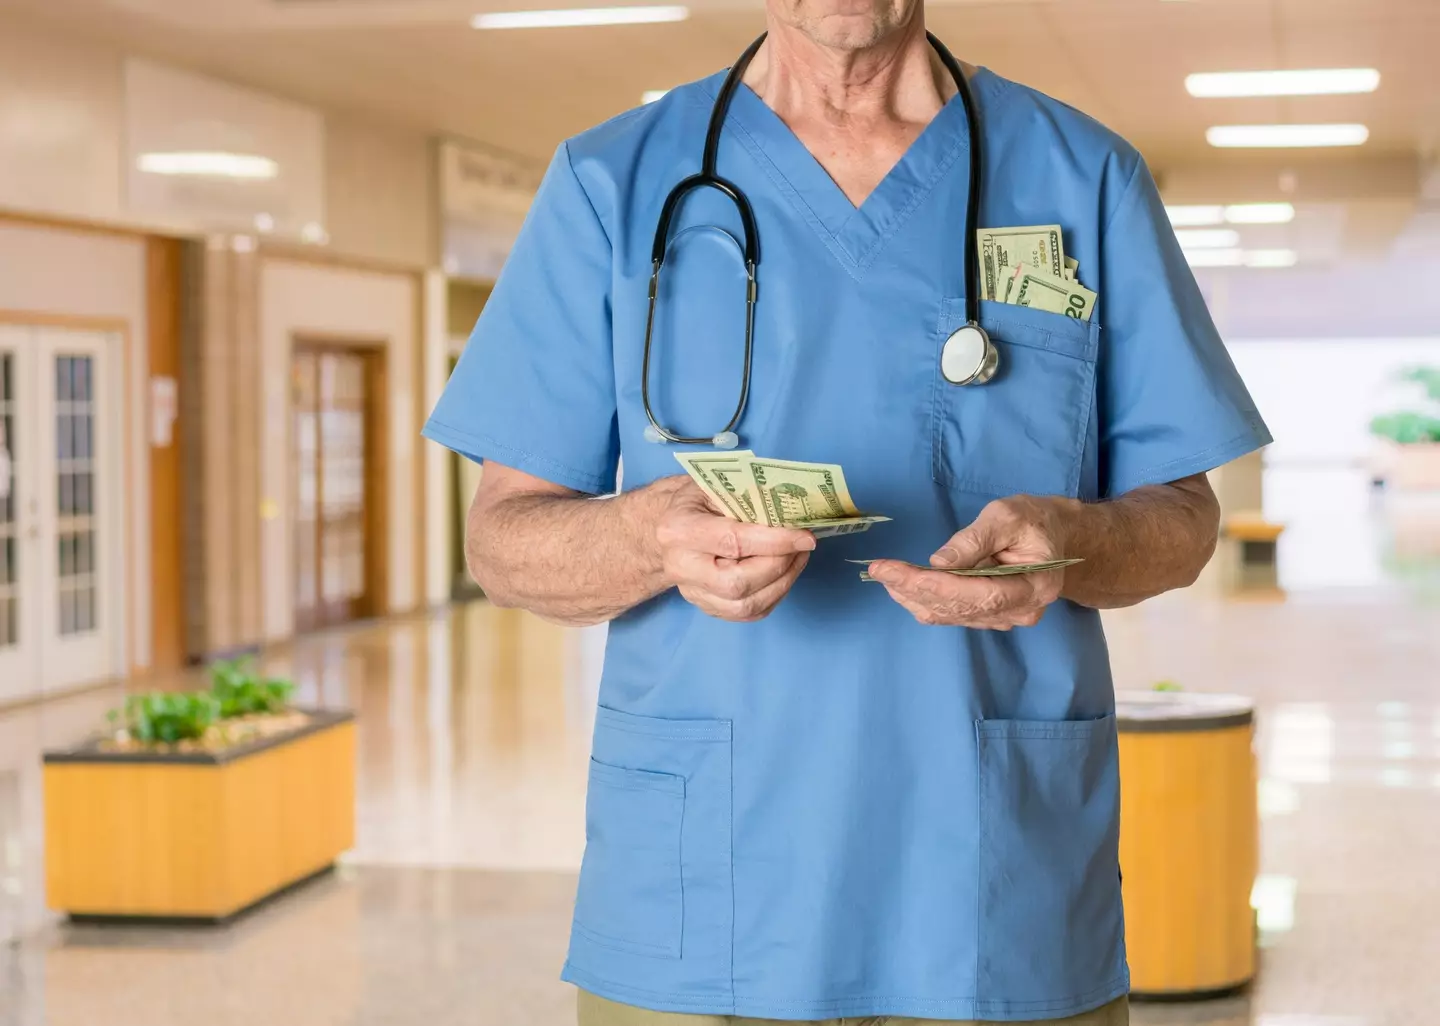 When the retired teacher got home he found a $42,000 medical bill had followed him.